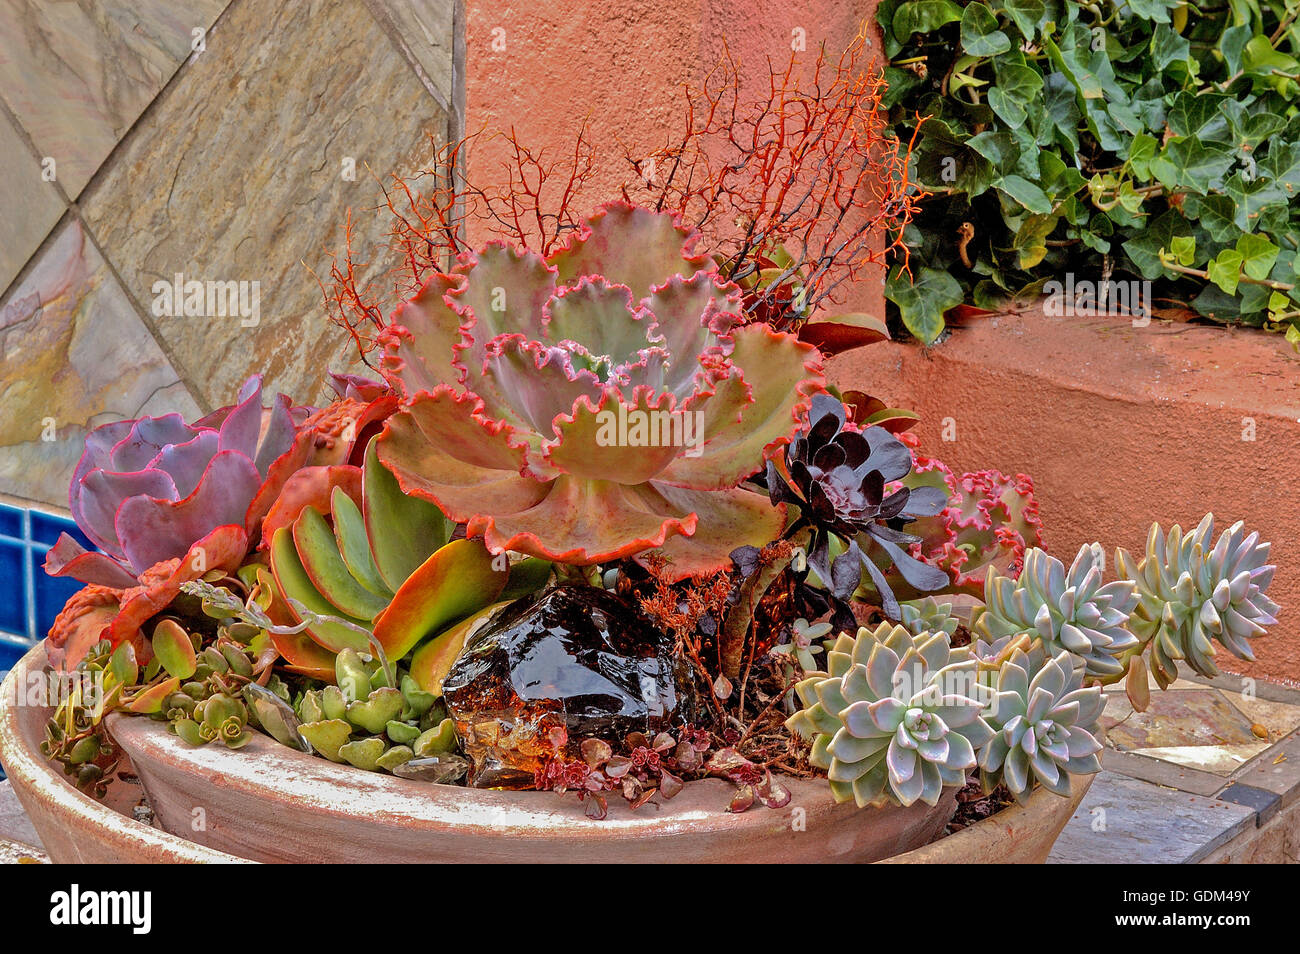 Untertasse mit Sukkulenten bepflanzt: Echeveria, Aeonium, Kalanchoe, Stockfoto